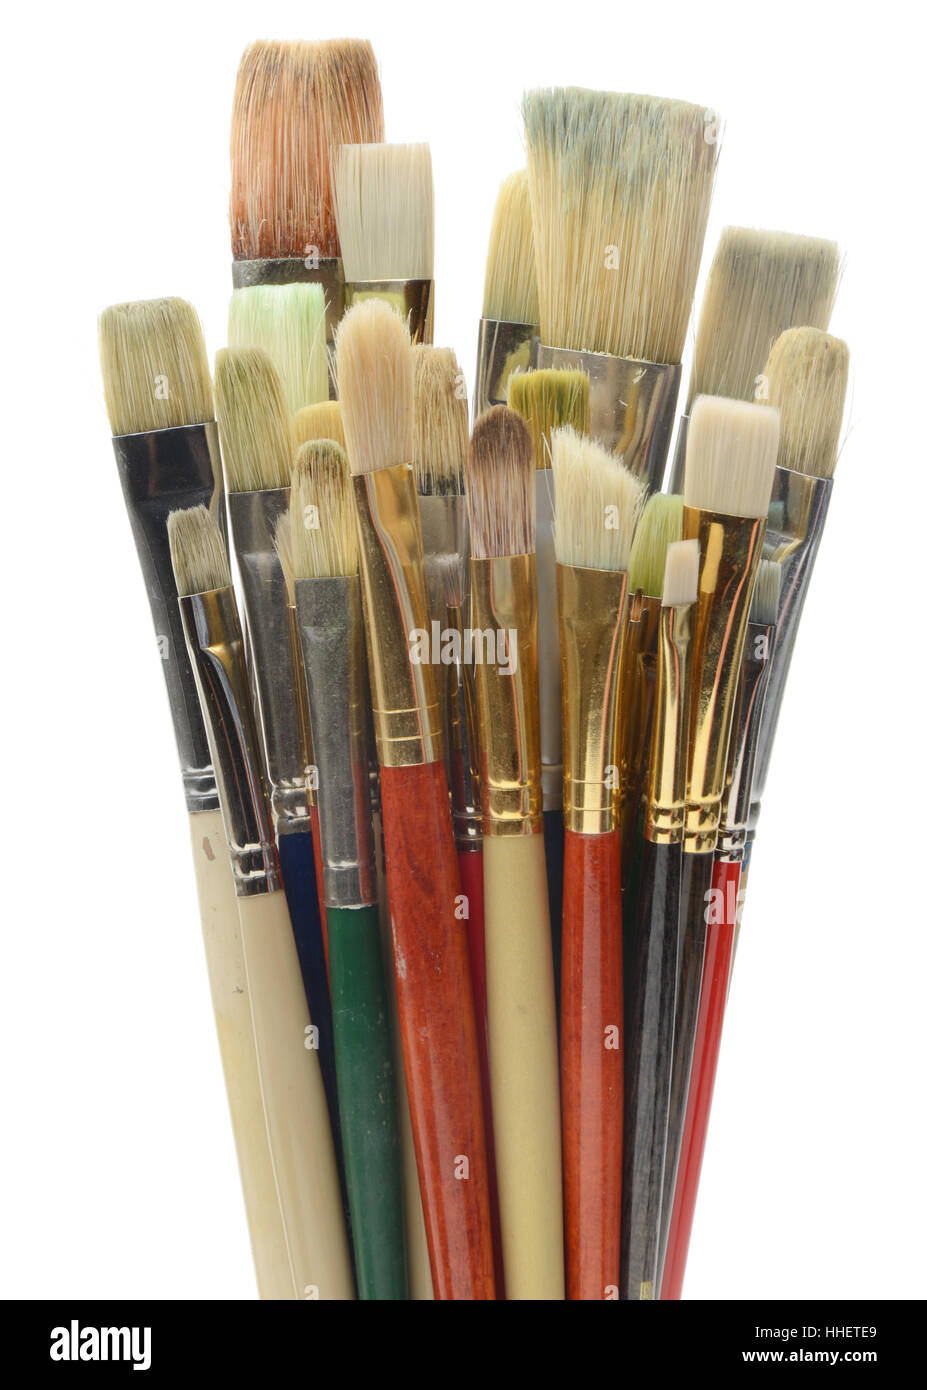 https://c8.alamy.com/comp/HHETE9/art-brushes-art-brushes-white-background-paint-brushes-art-supplies-HHETE9.jpg